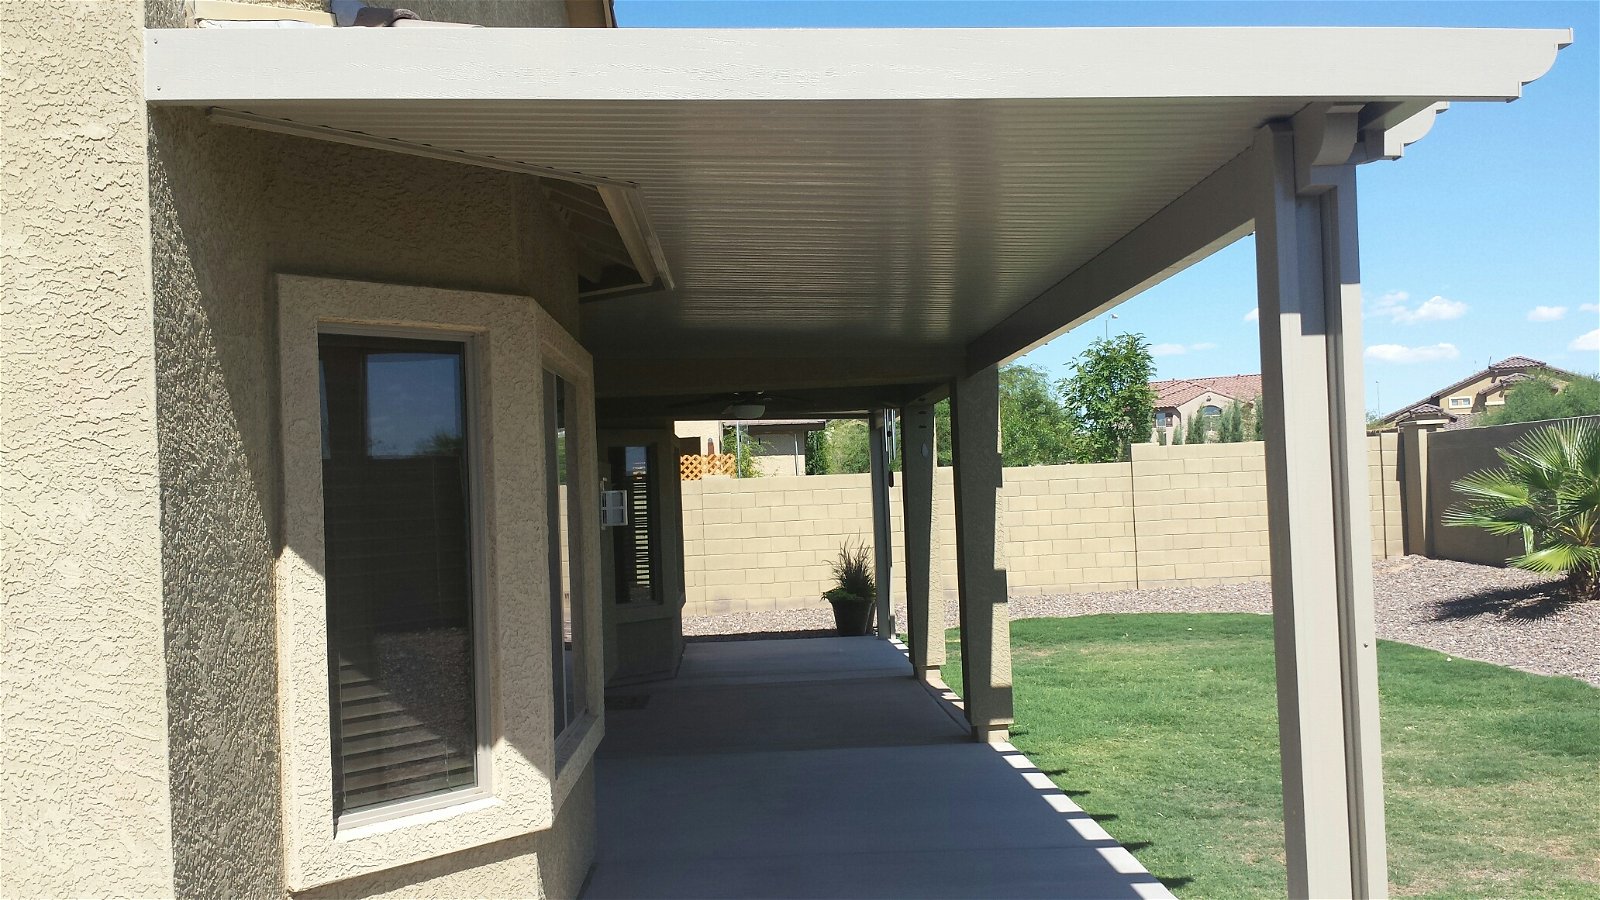 Alumawood Solid Patio Cover in Mesa, Arizona